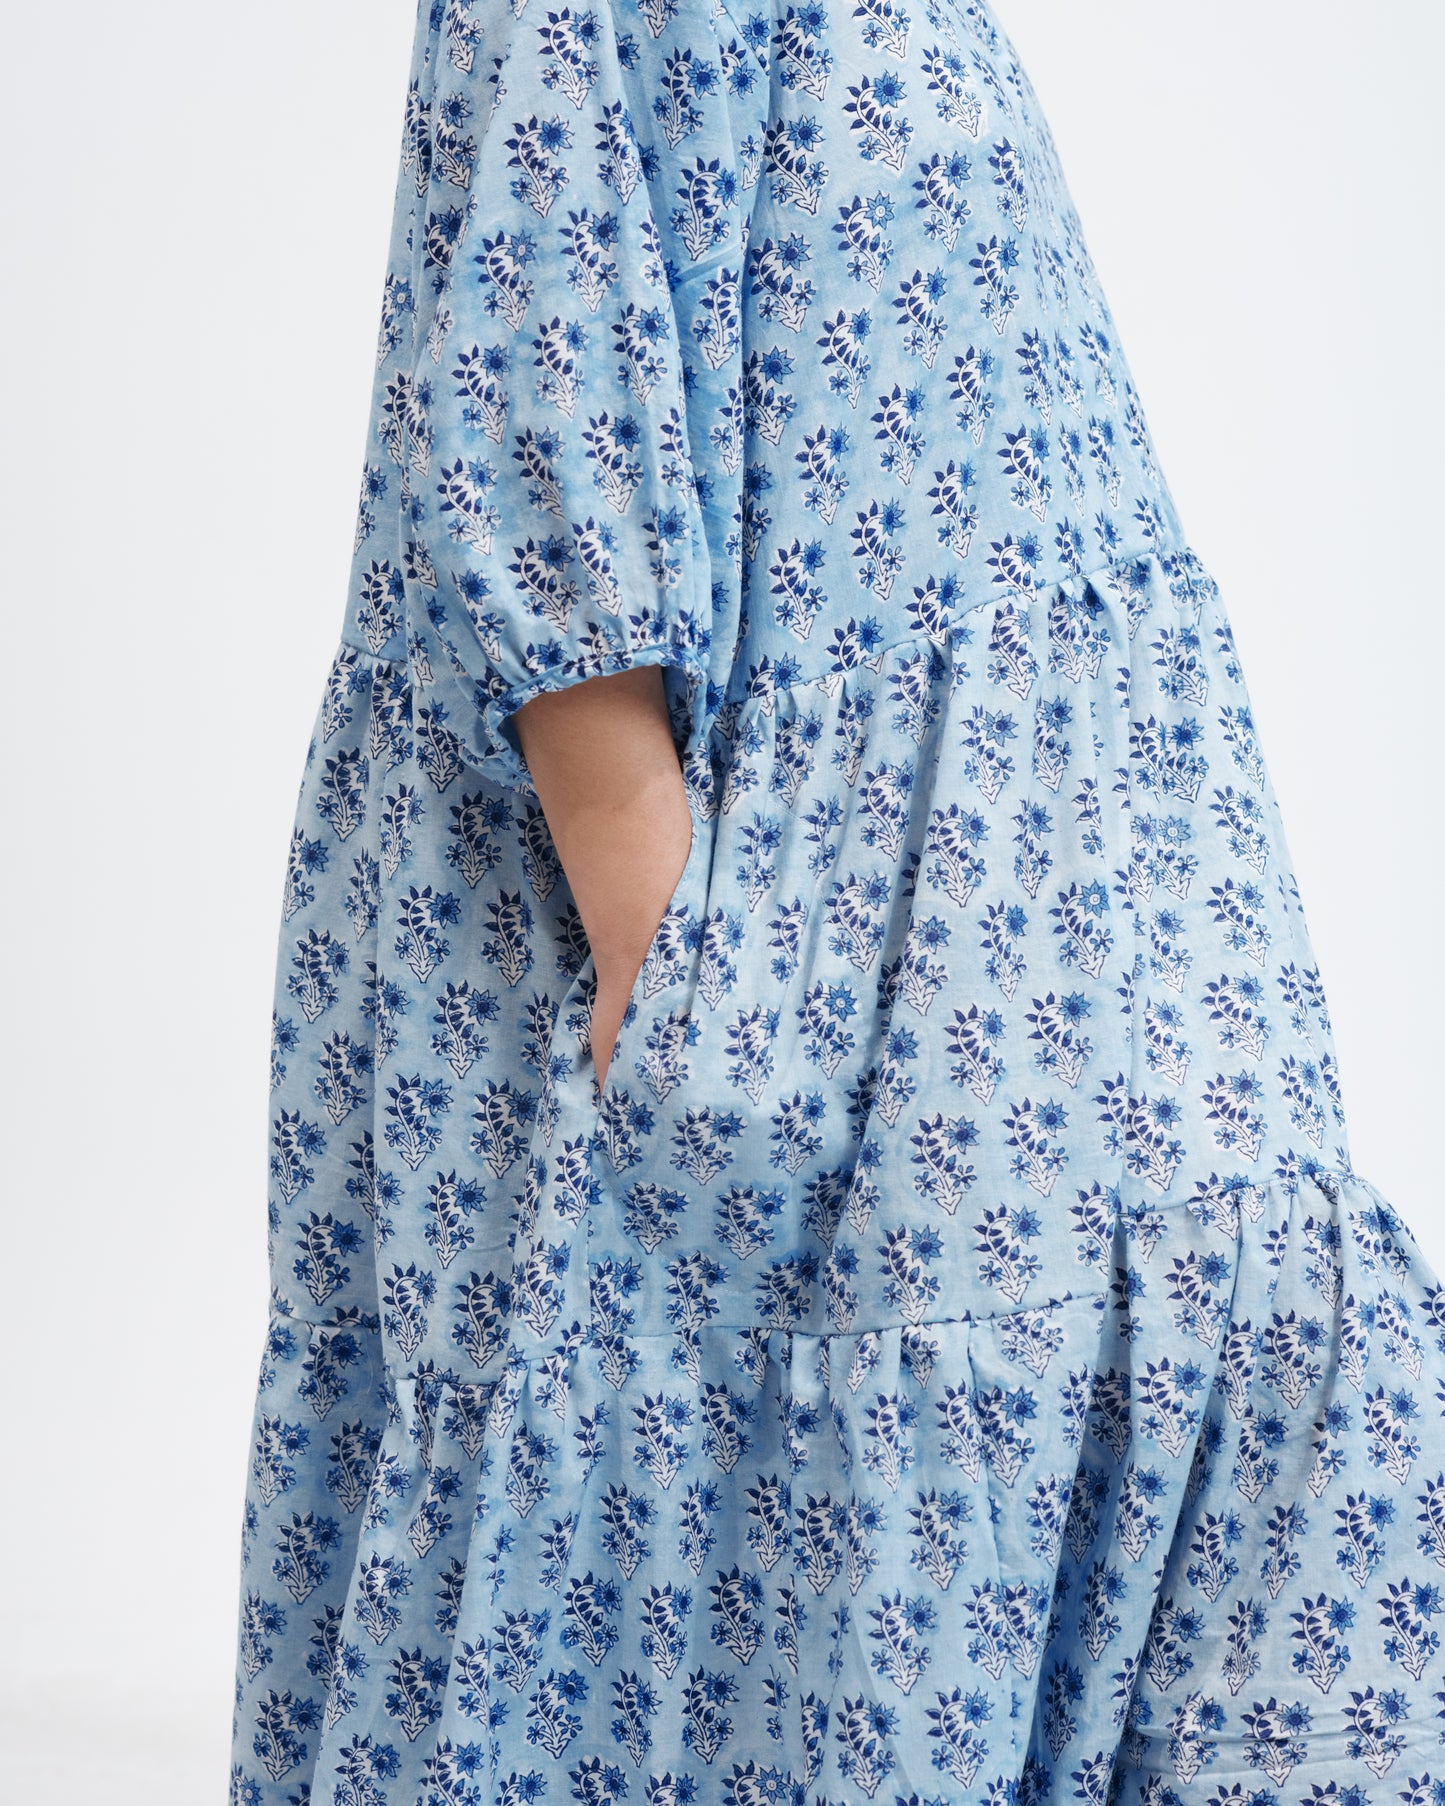 Isabel Dress in Bluebell ~ PRE ORDER